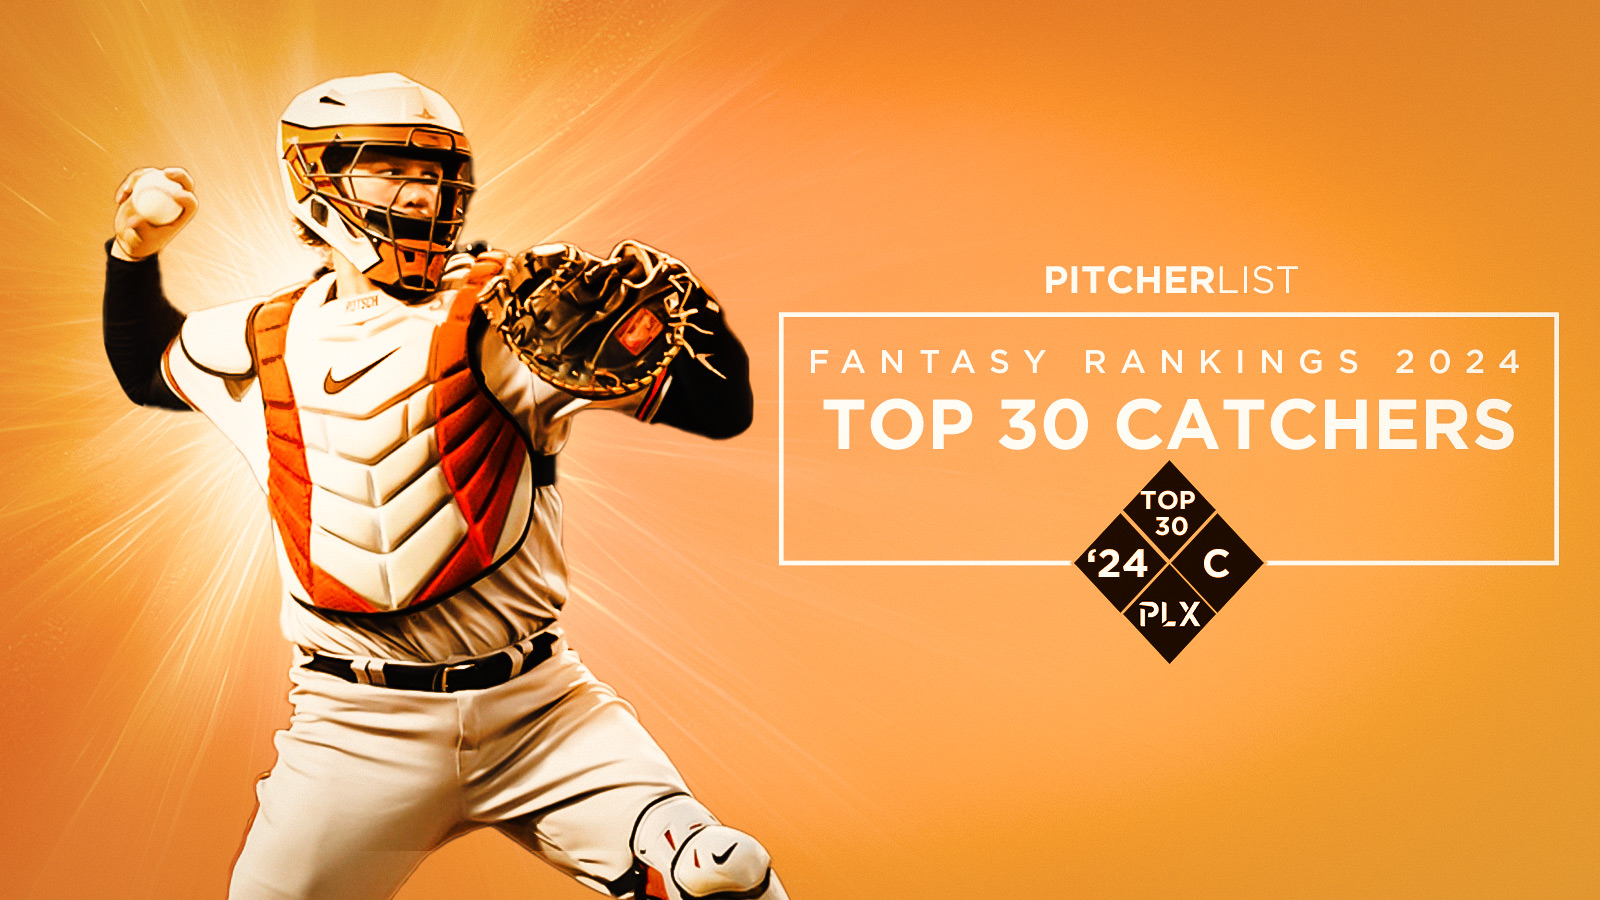 Top 30 Catchers for Fantasy Baseball 2024 Pitcher List